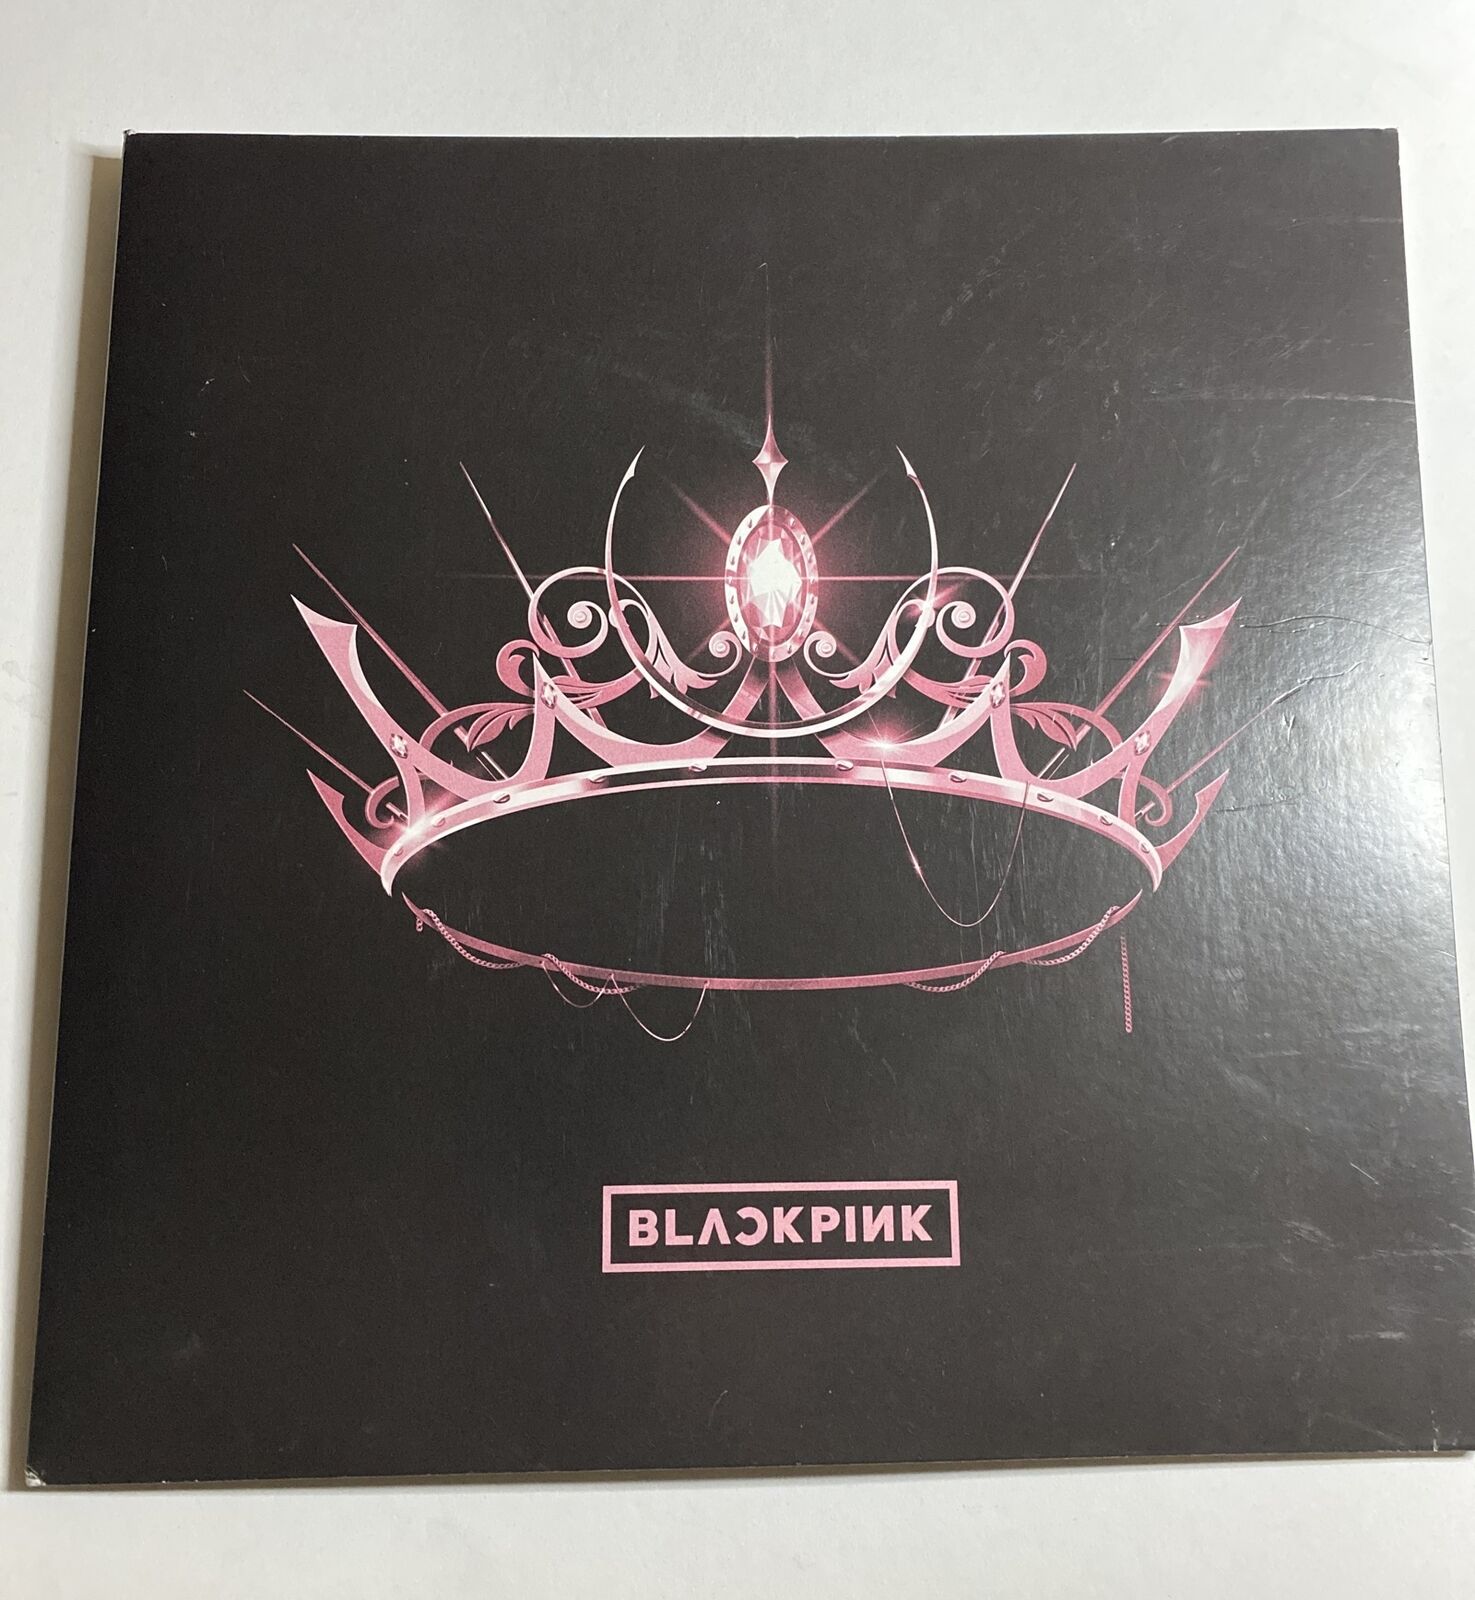 BLACKPINK “The Album” LP 2021 YG/Interscope, near mint pink vinyl, K-Pop Rock